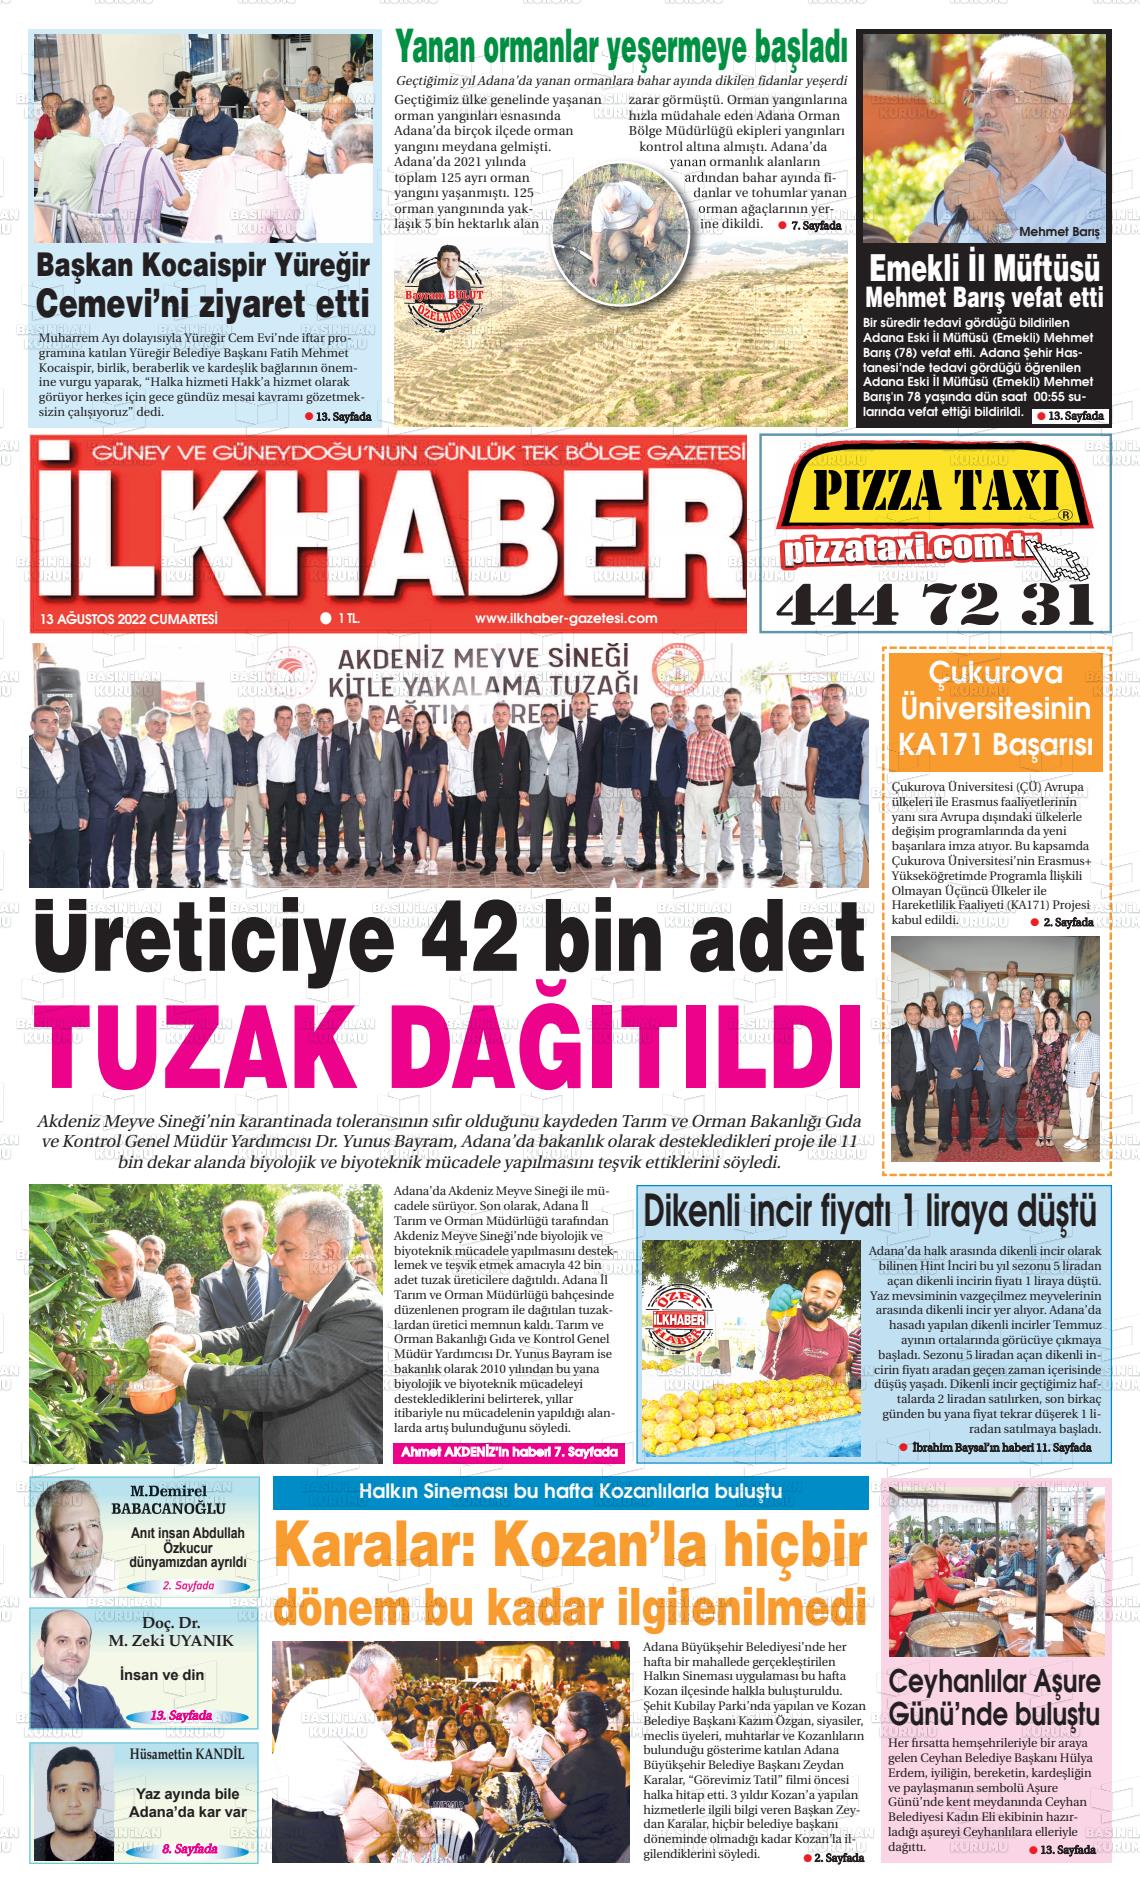 13 Ağustos 2022 İlk Haber Gazete Manşeti